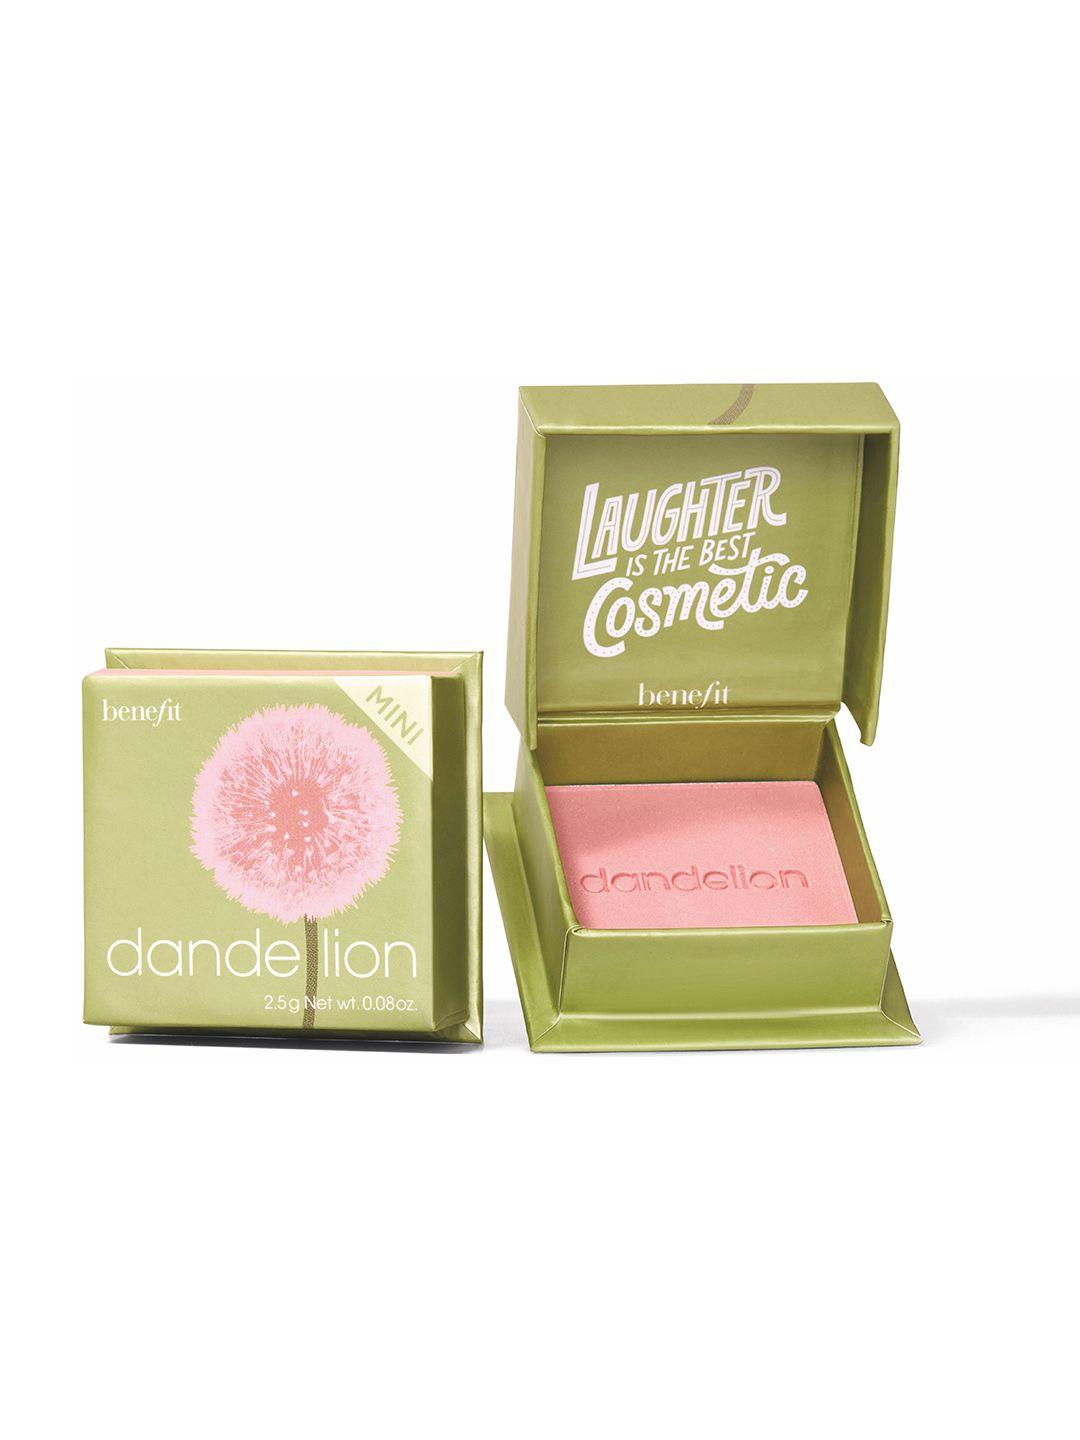 benefit cosmetics smudge proof soft shimmer finish powder baby-pink mini blush 2.5 g - dandelion